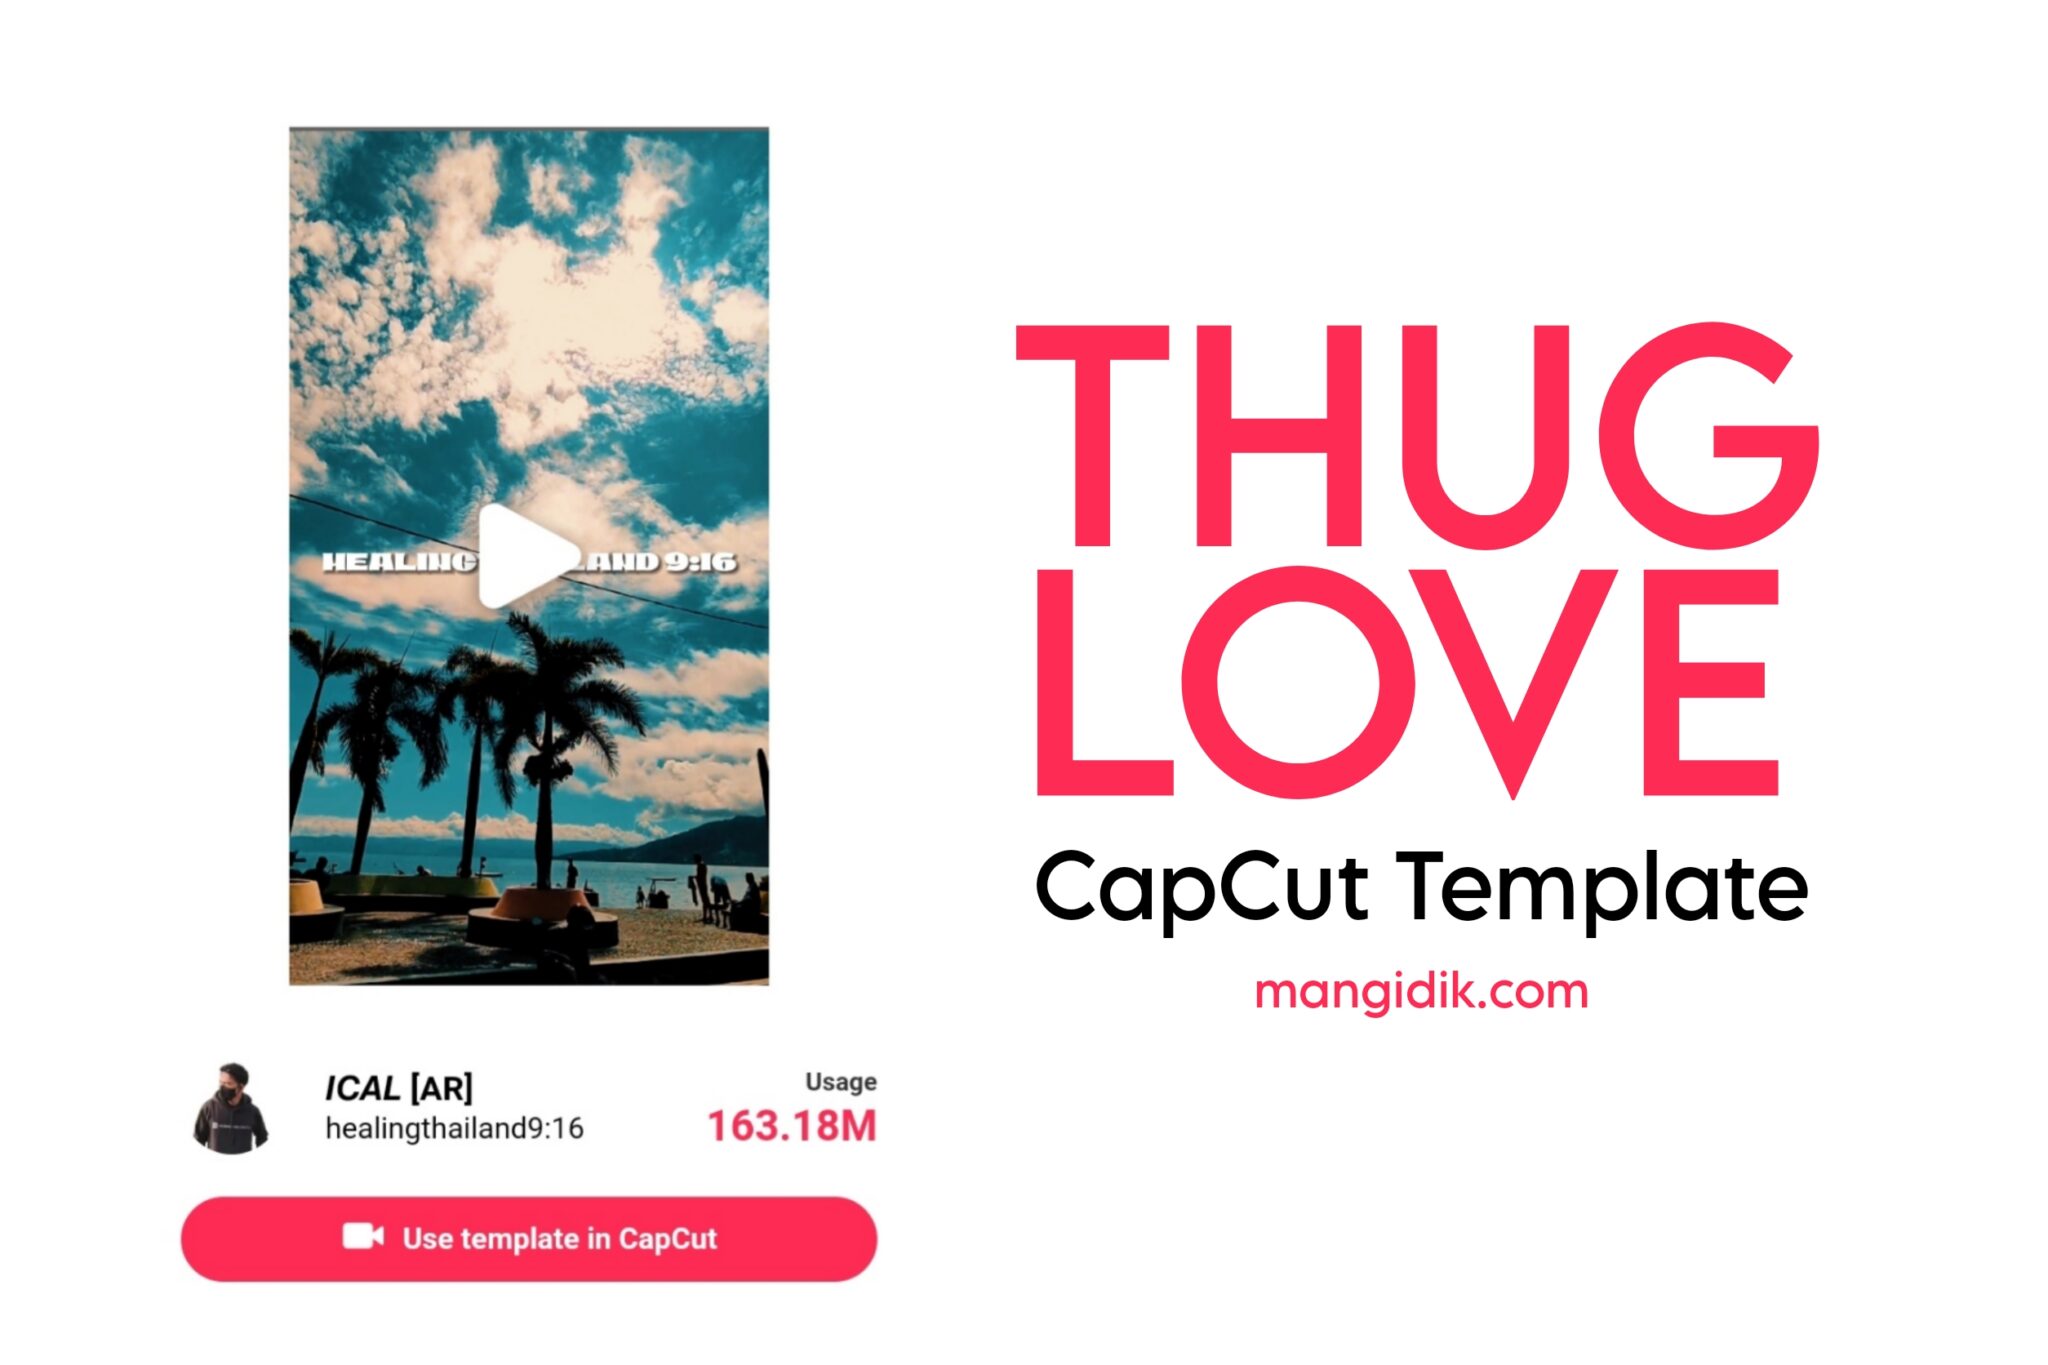 thug-love-capcut-template-link-by-ical-mang-idik